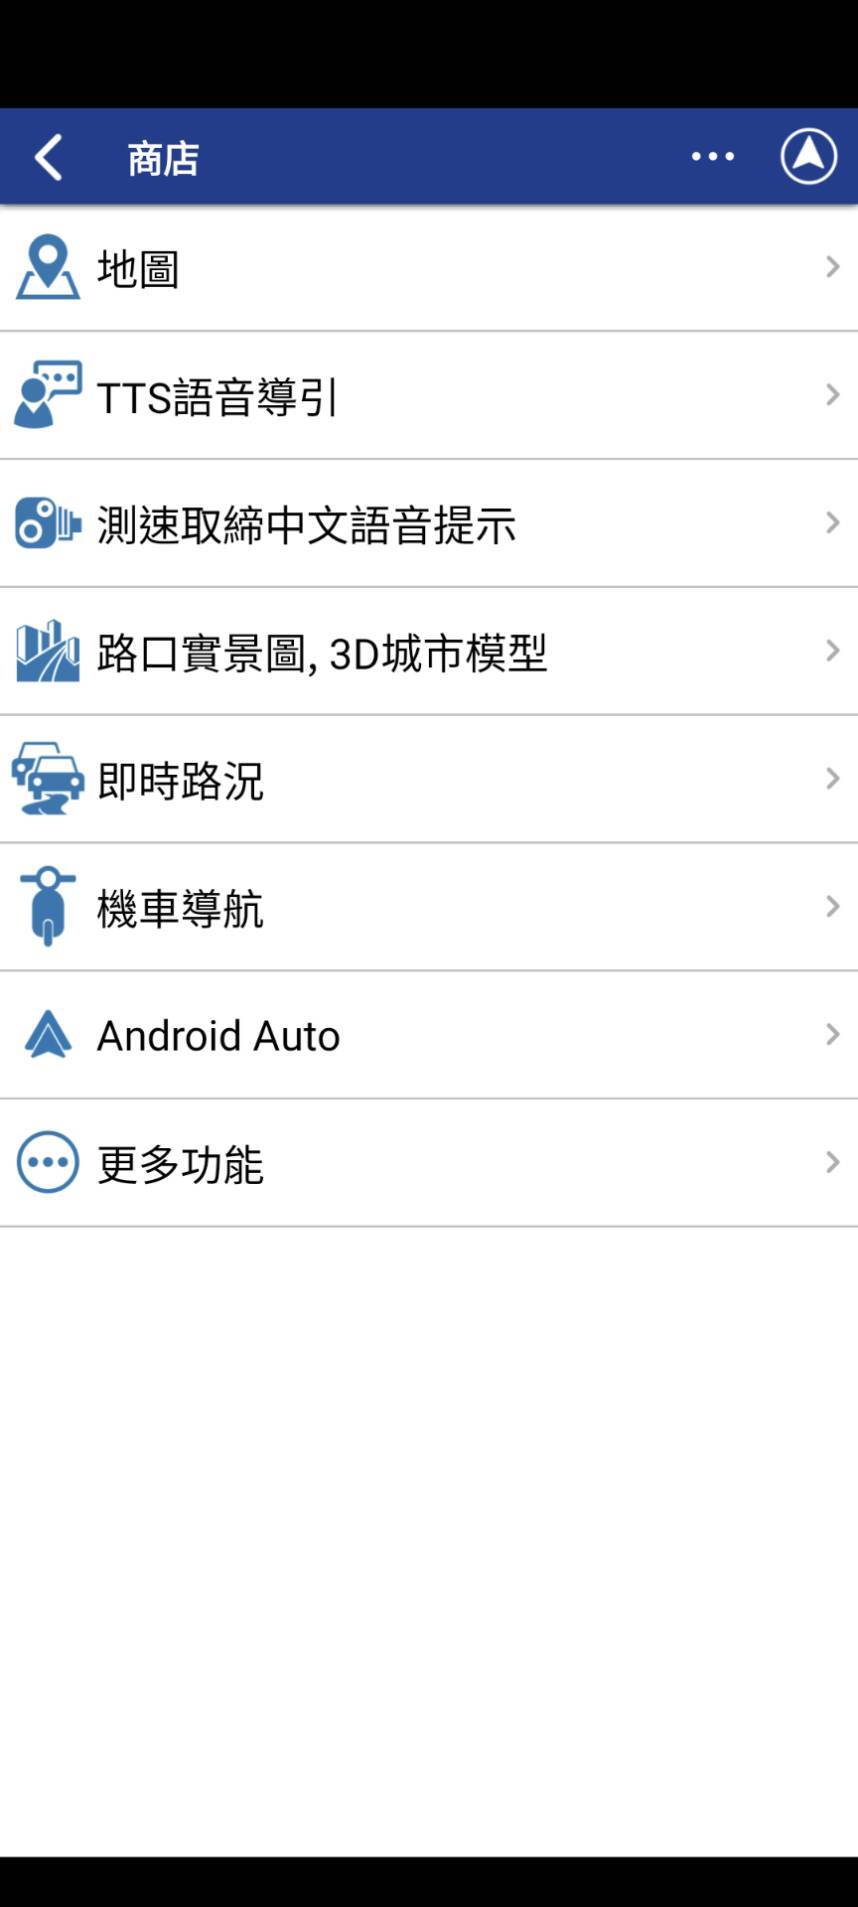 Polnav mobile Android 重新安裝台灣圖資的方式